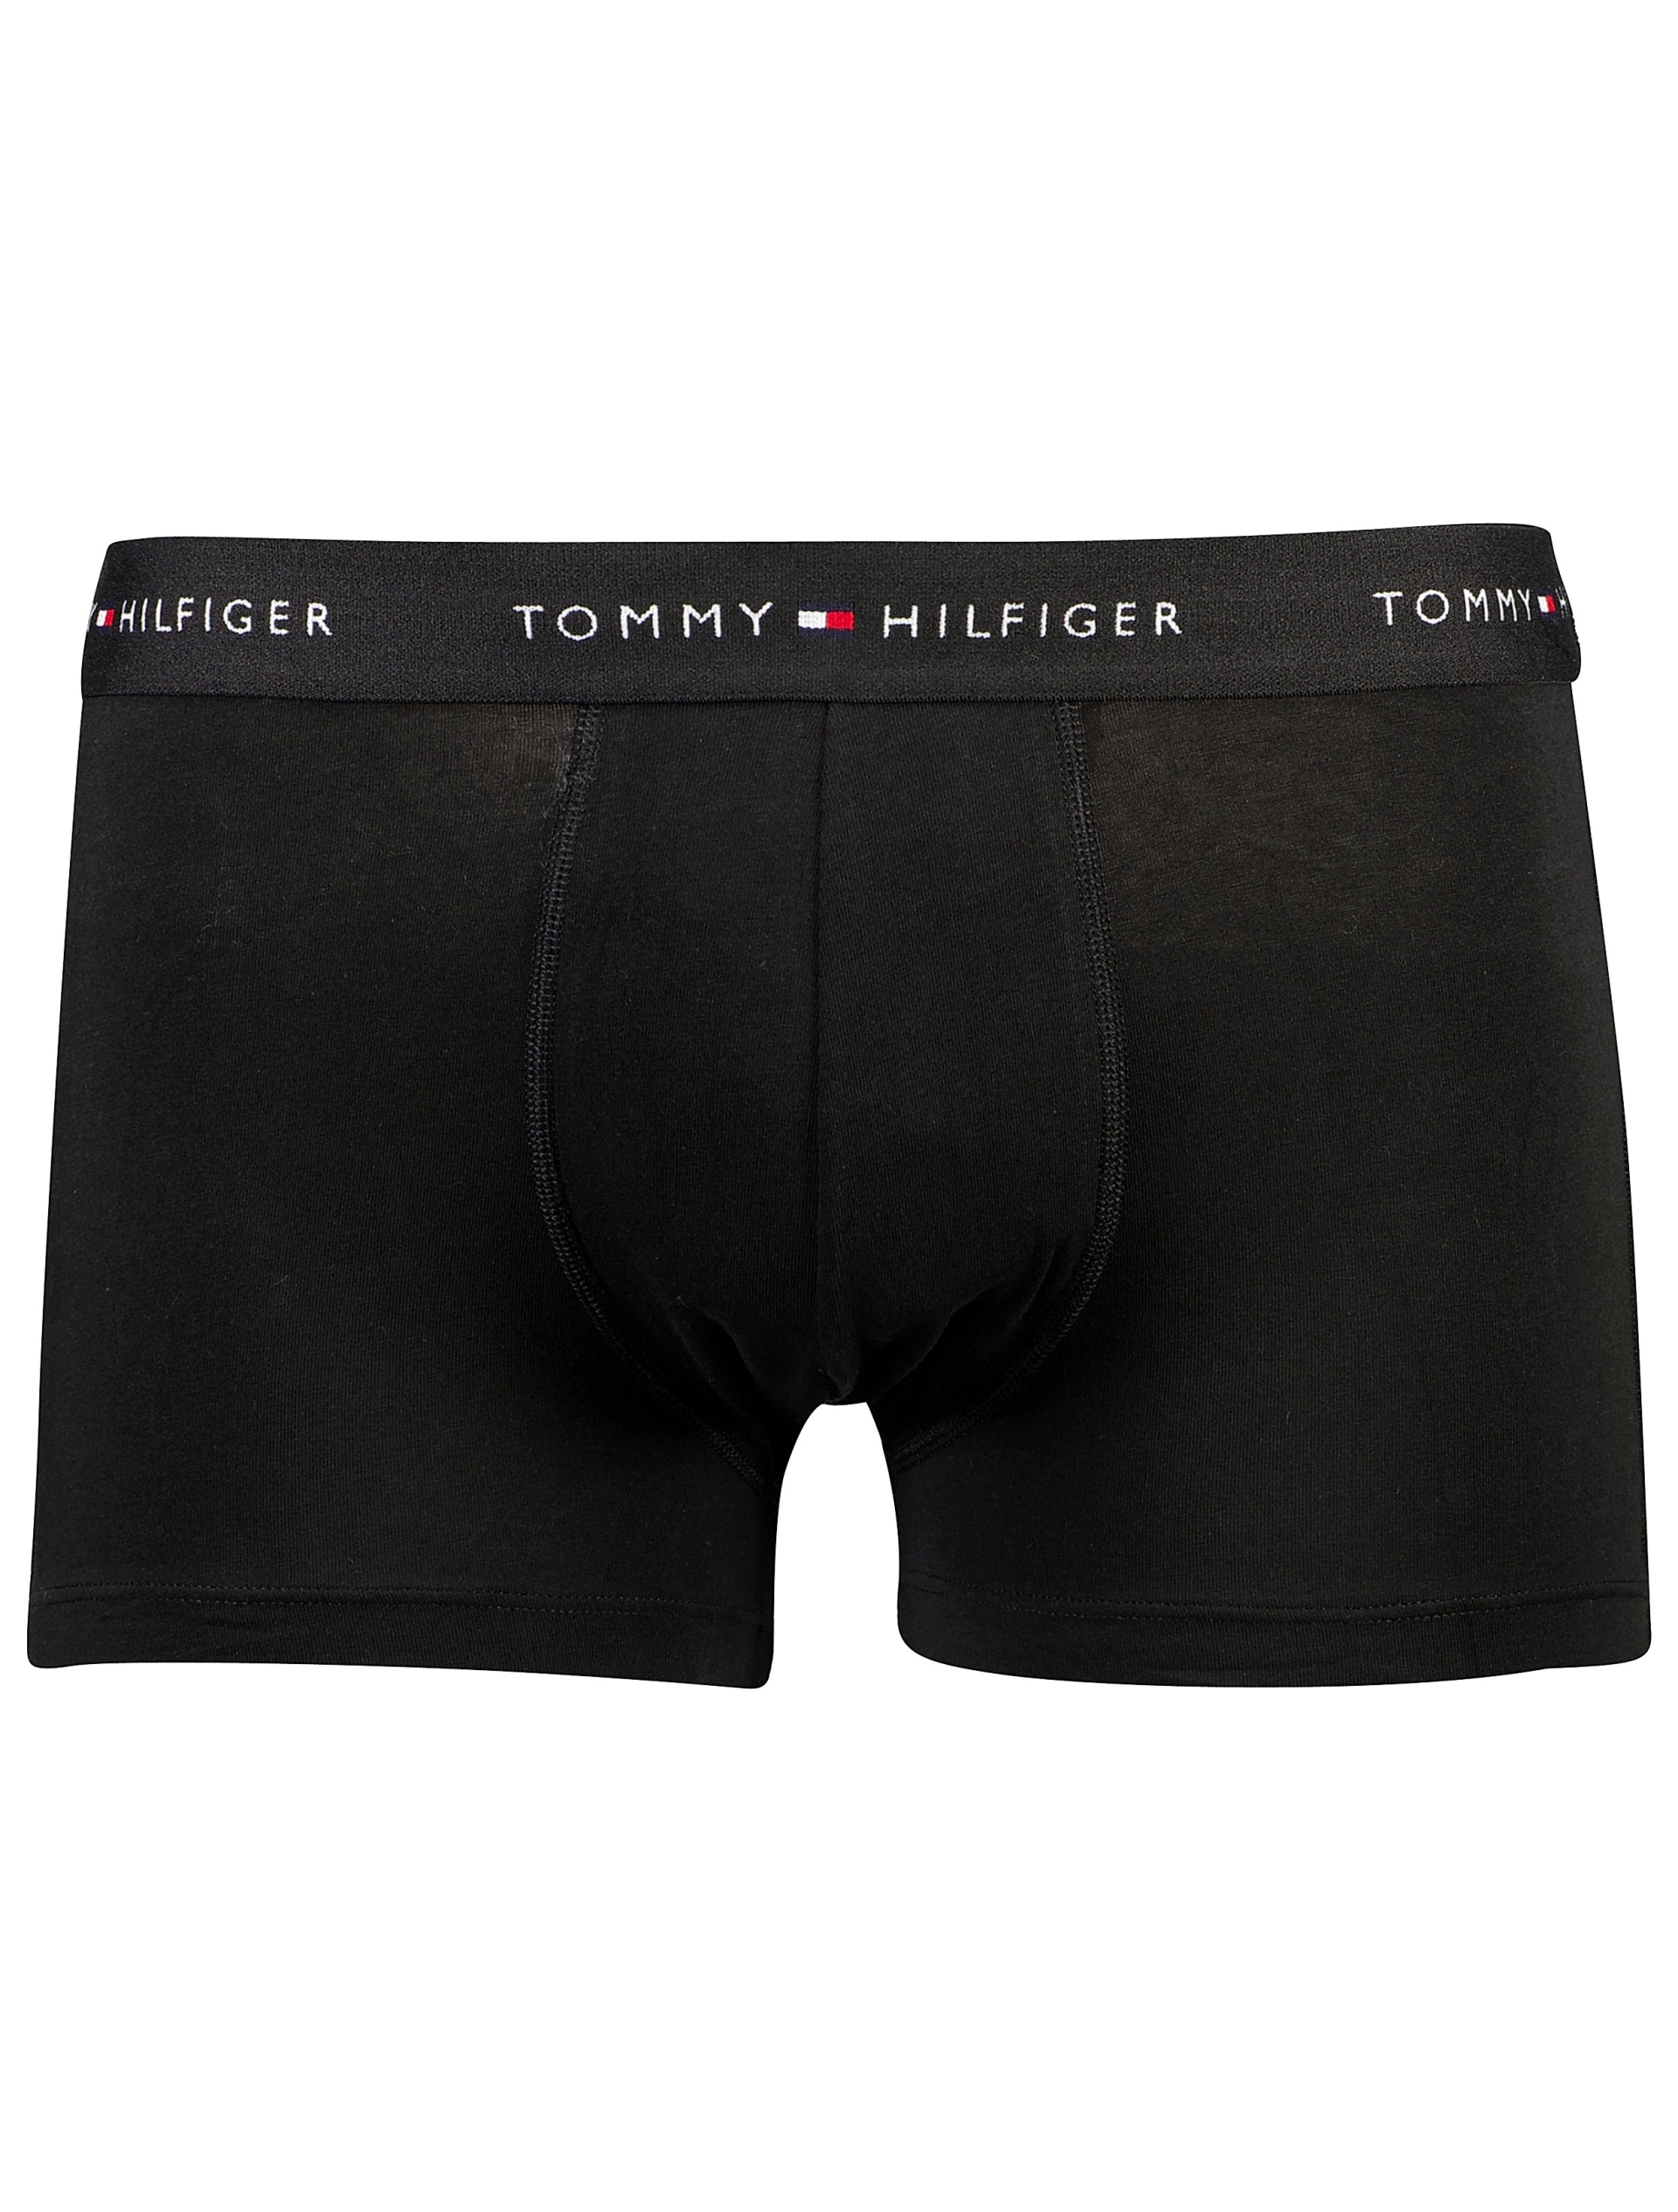 Tommy Hilfiger Tights sort / 0uc grey